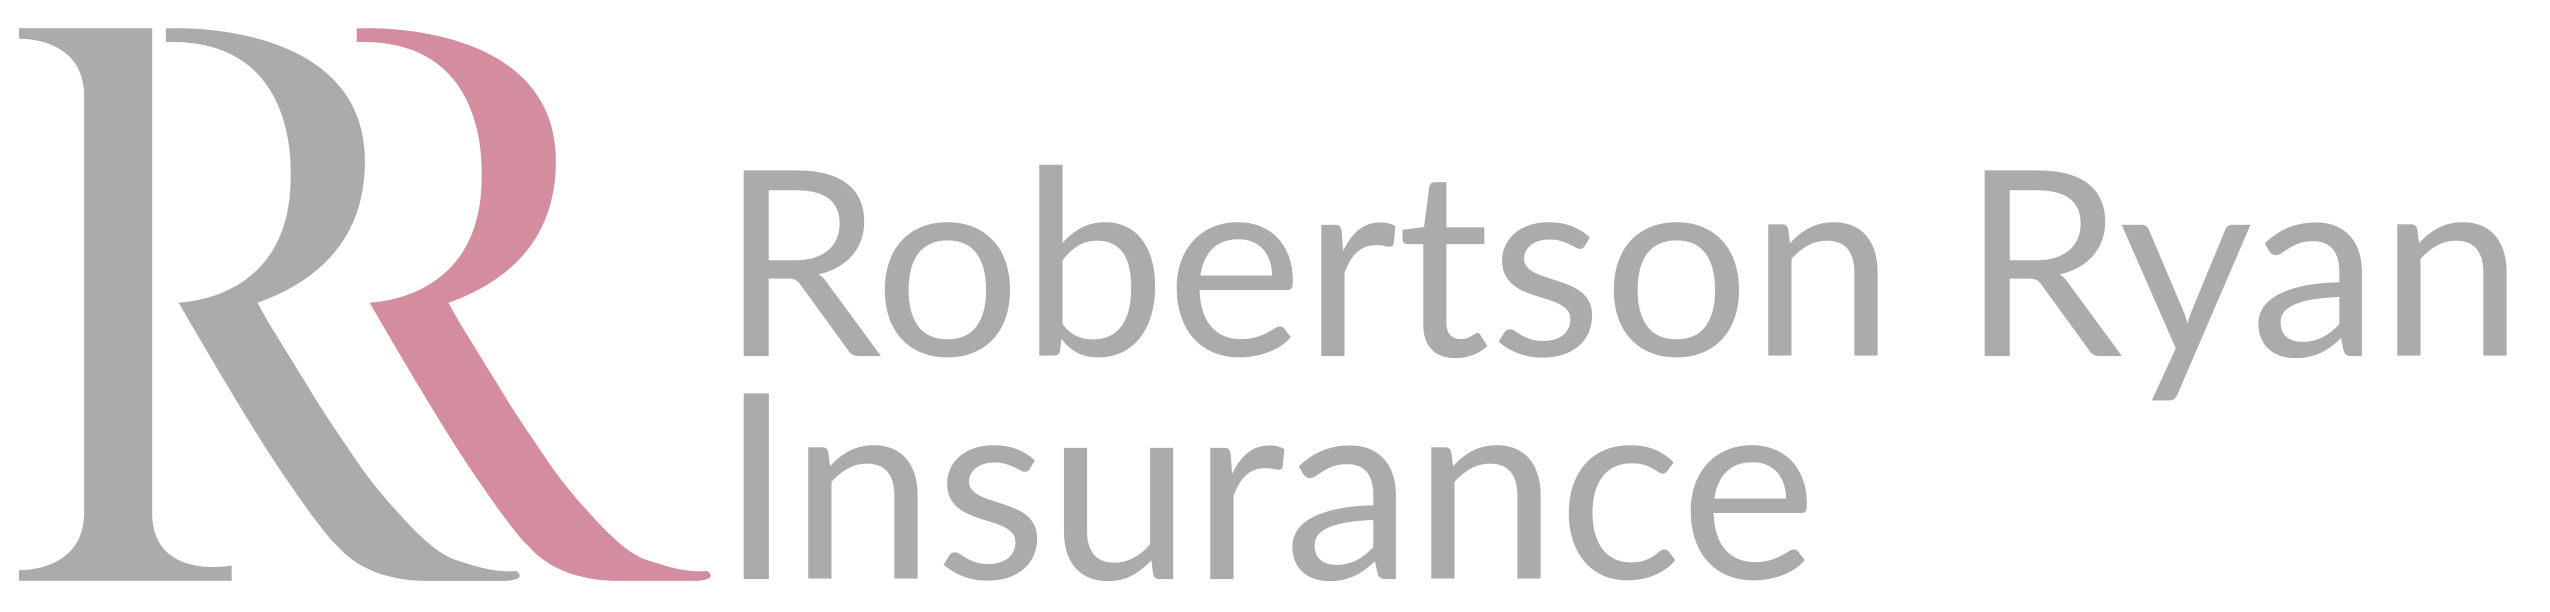 Robertson Ryan Insurance logo